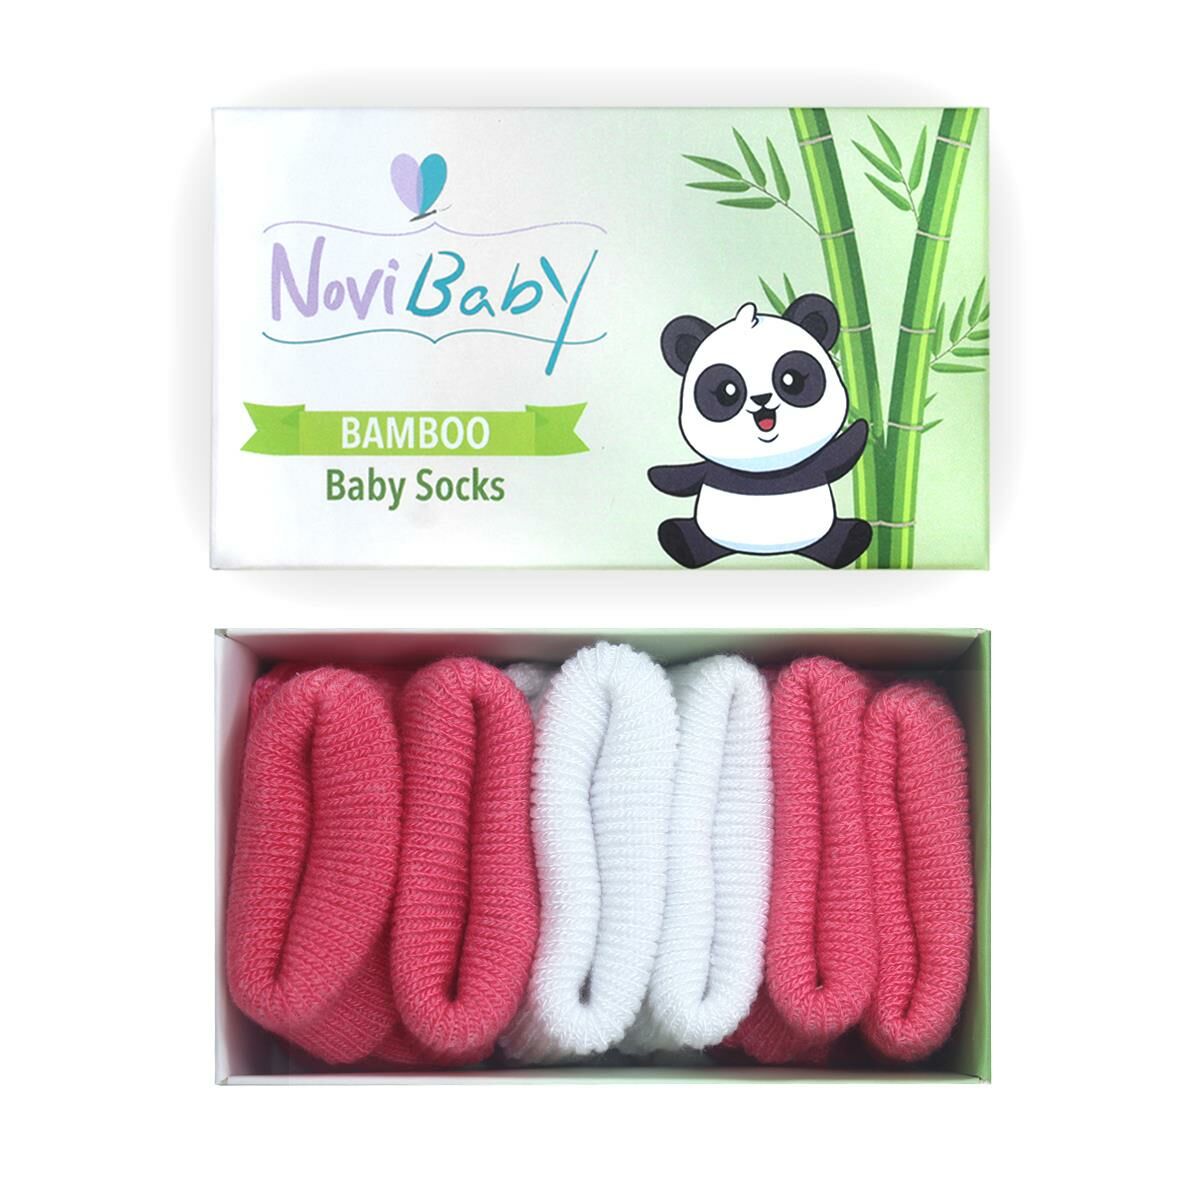 Novibaby 3'lü Bambu Bebek Çorap I White Candy I 0-6 ay I Yenidoğan Kız Erkek Bebek Çorabı